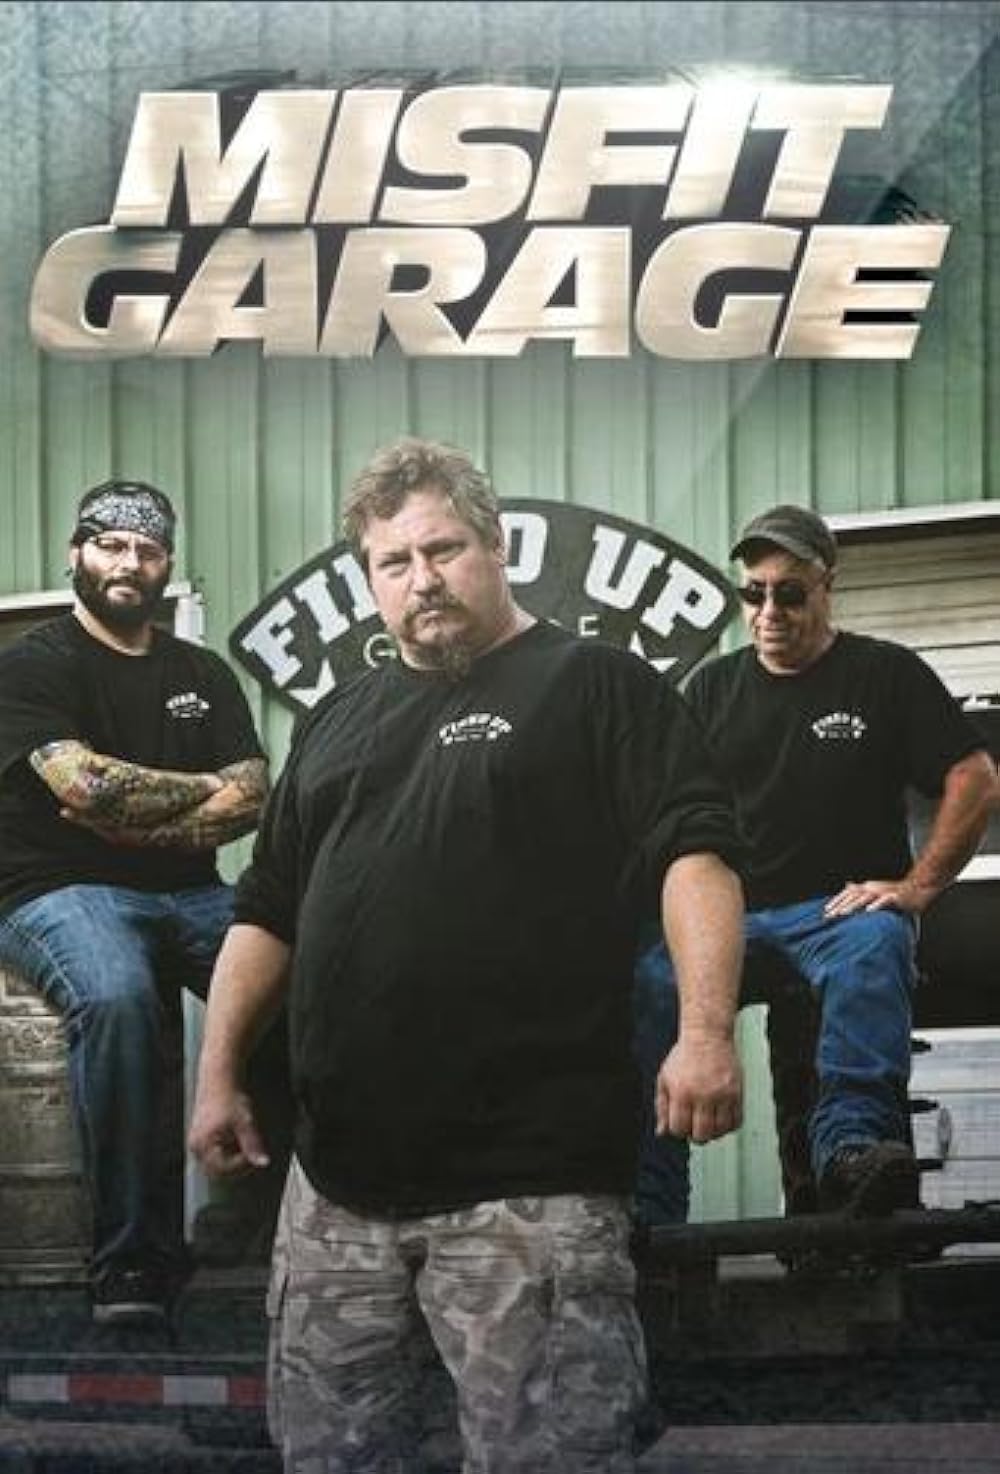 Misfit Garage